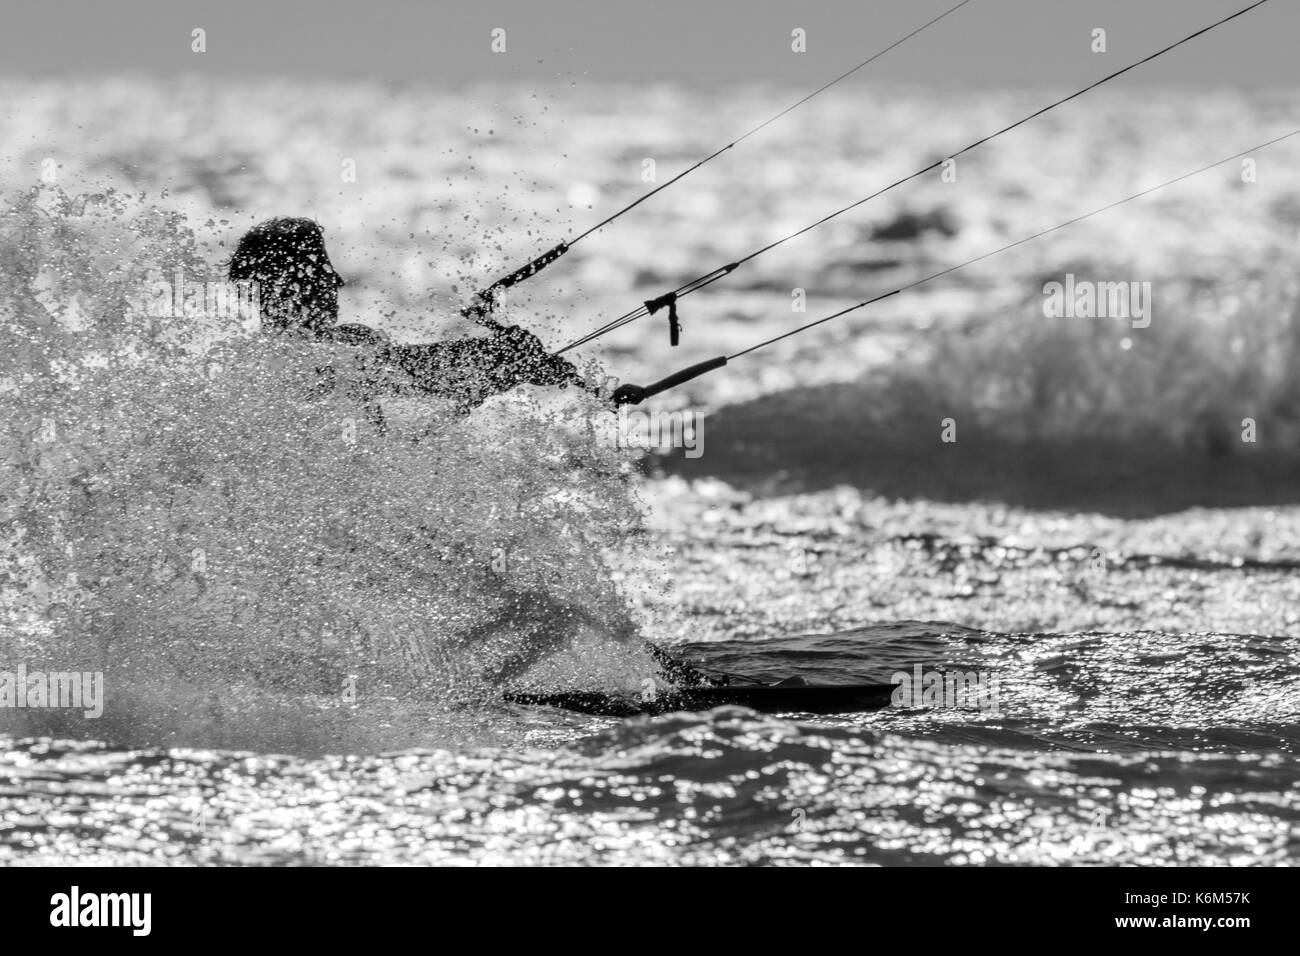 Un kitesurfer spruzzi d'acqua, soft focus dof poco profondo Foto Stock